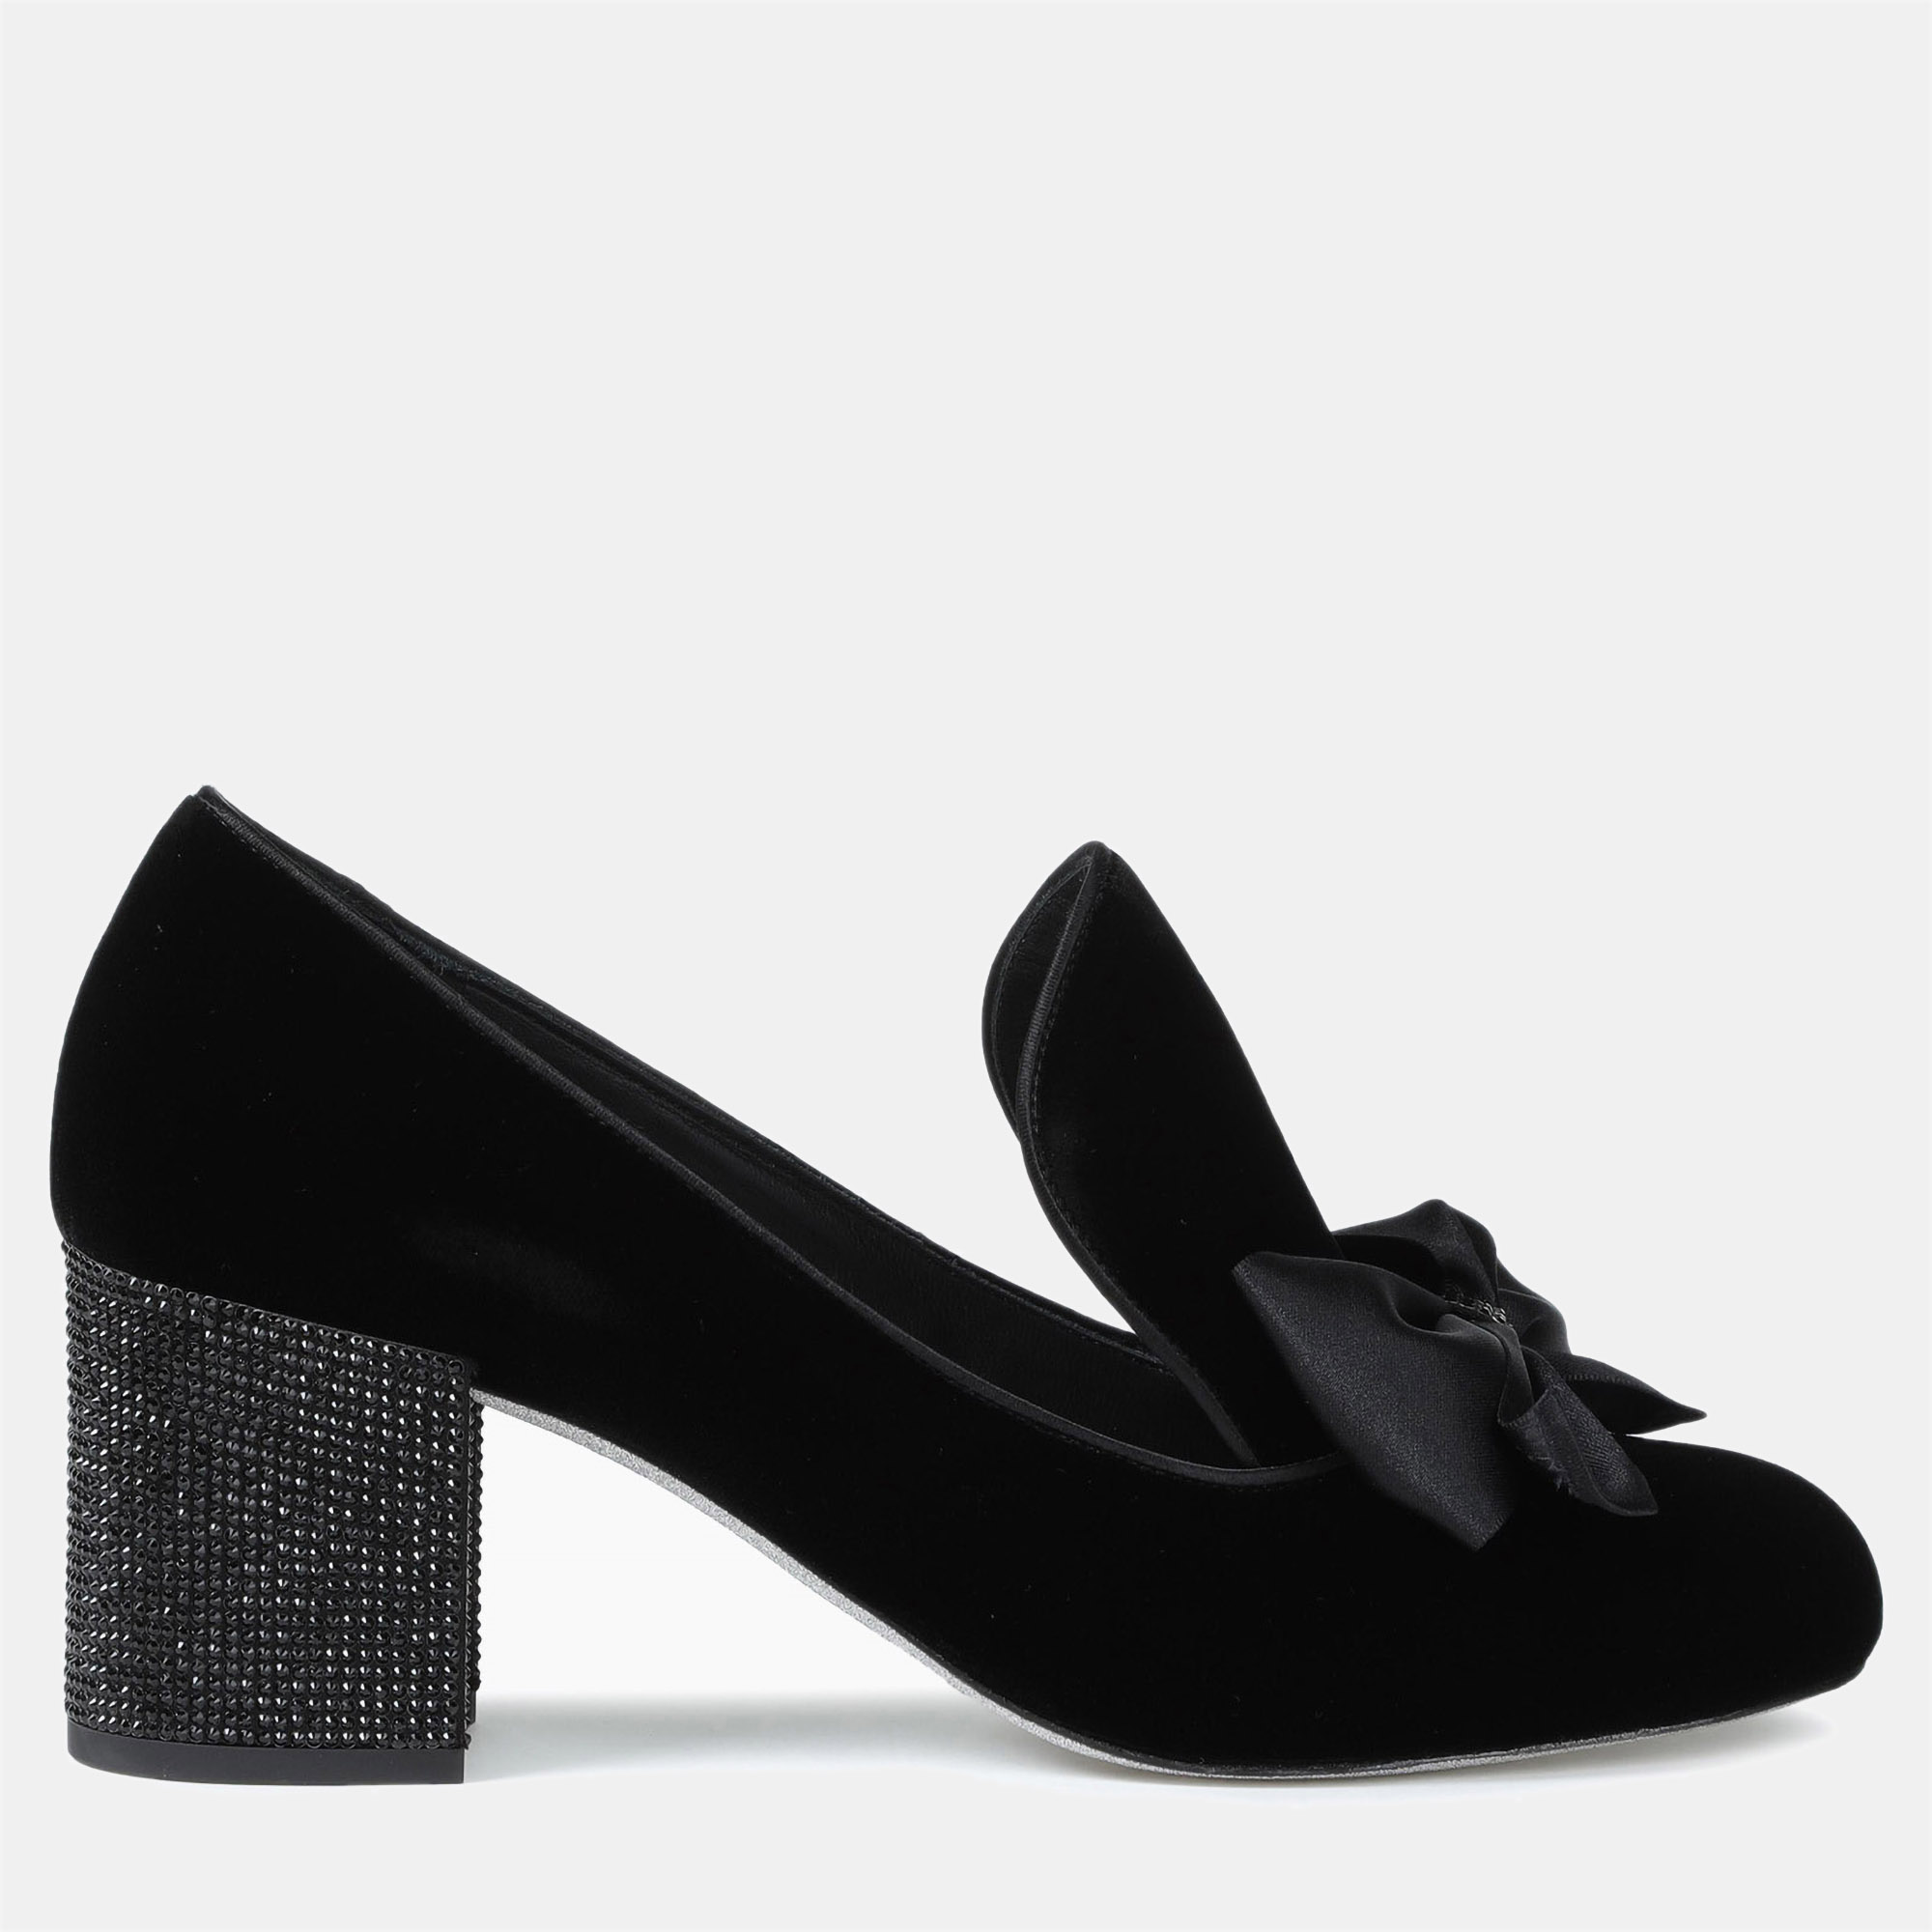 Rene caovilla black velvet block heel pumps size 36.5